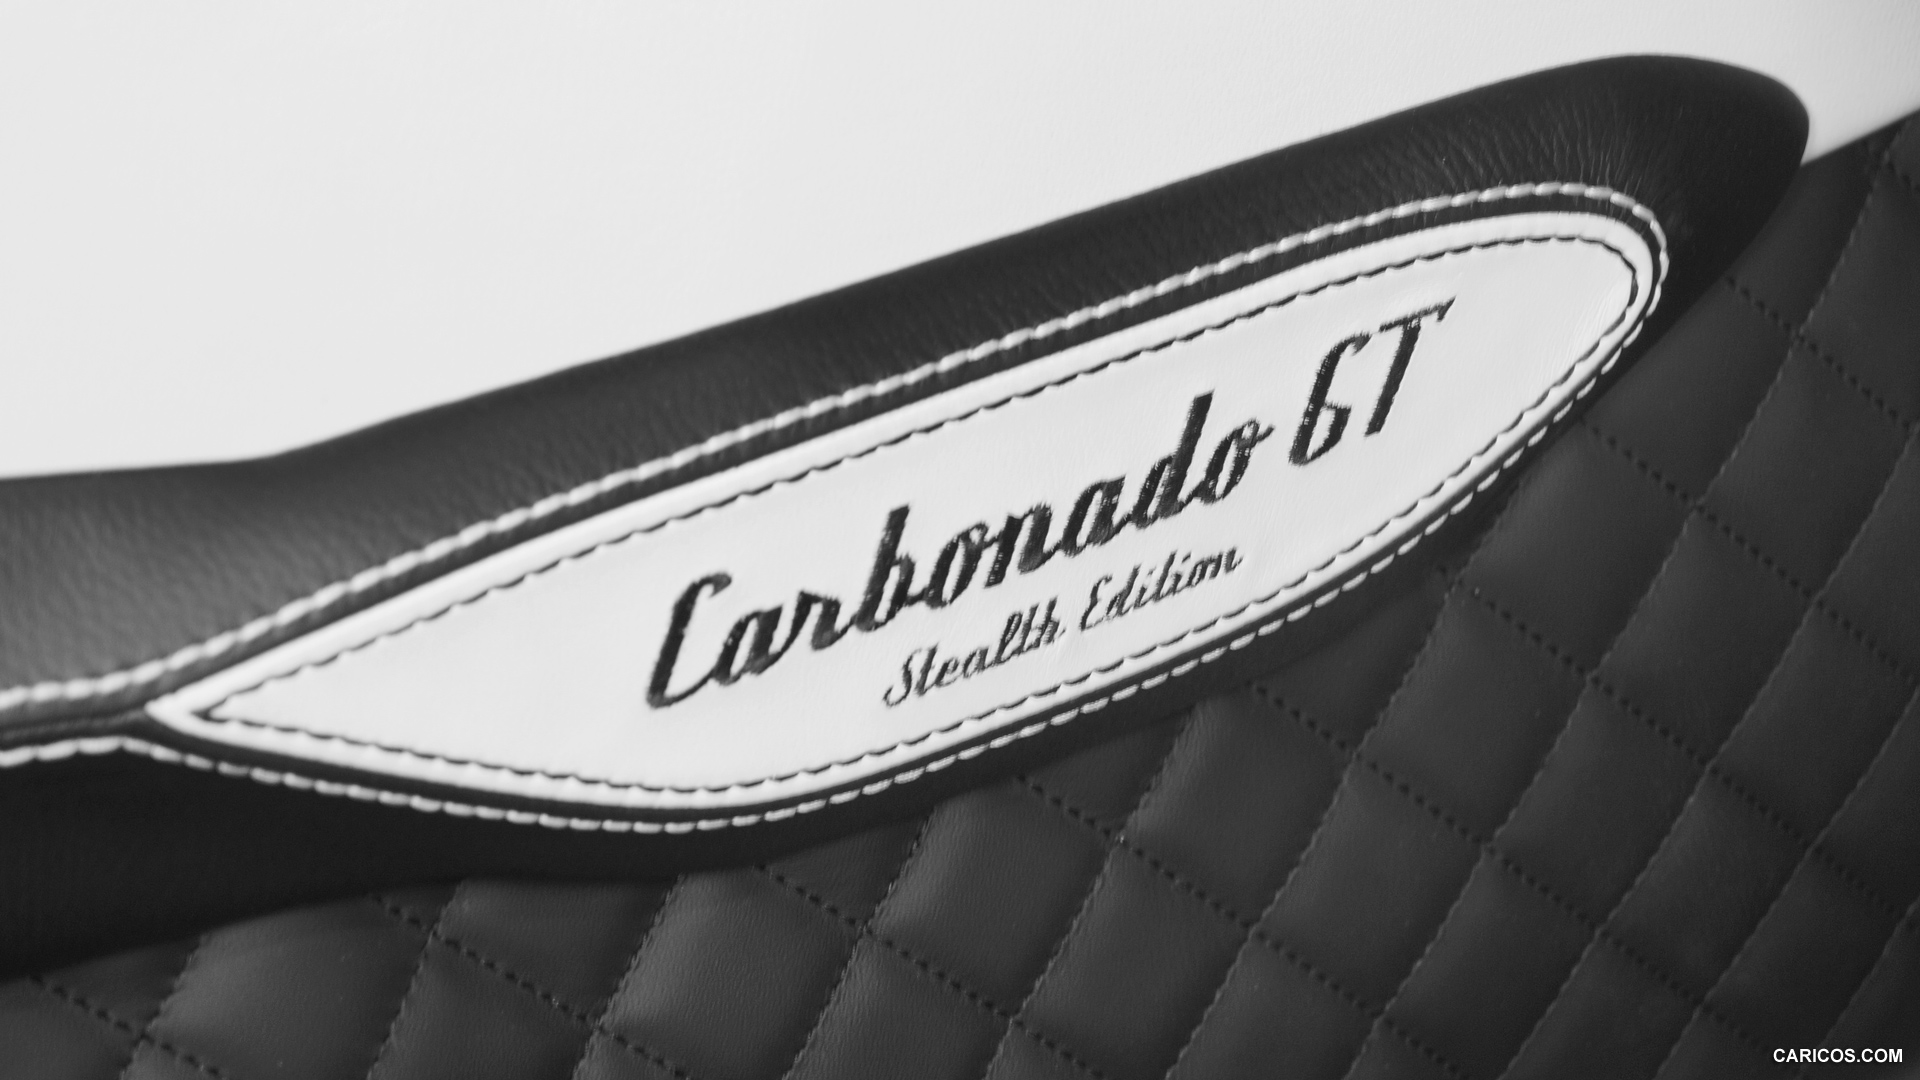 2014 Mansory Carbonado GT based on Lamborghini Aventador  - Detail, #6 of 8